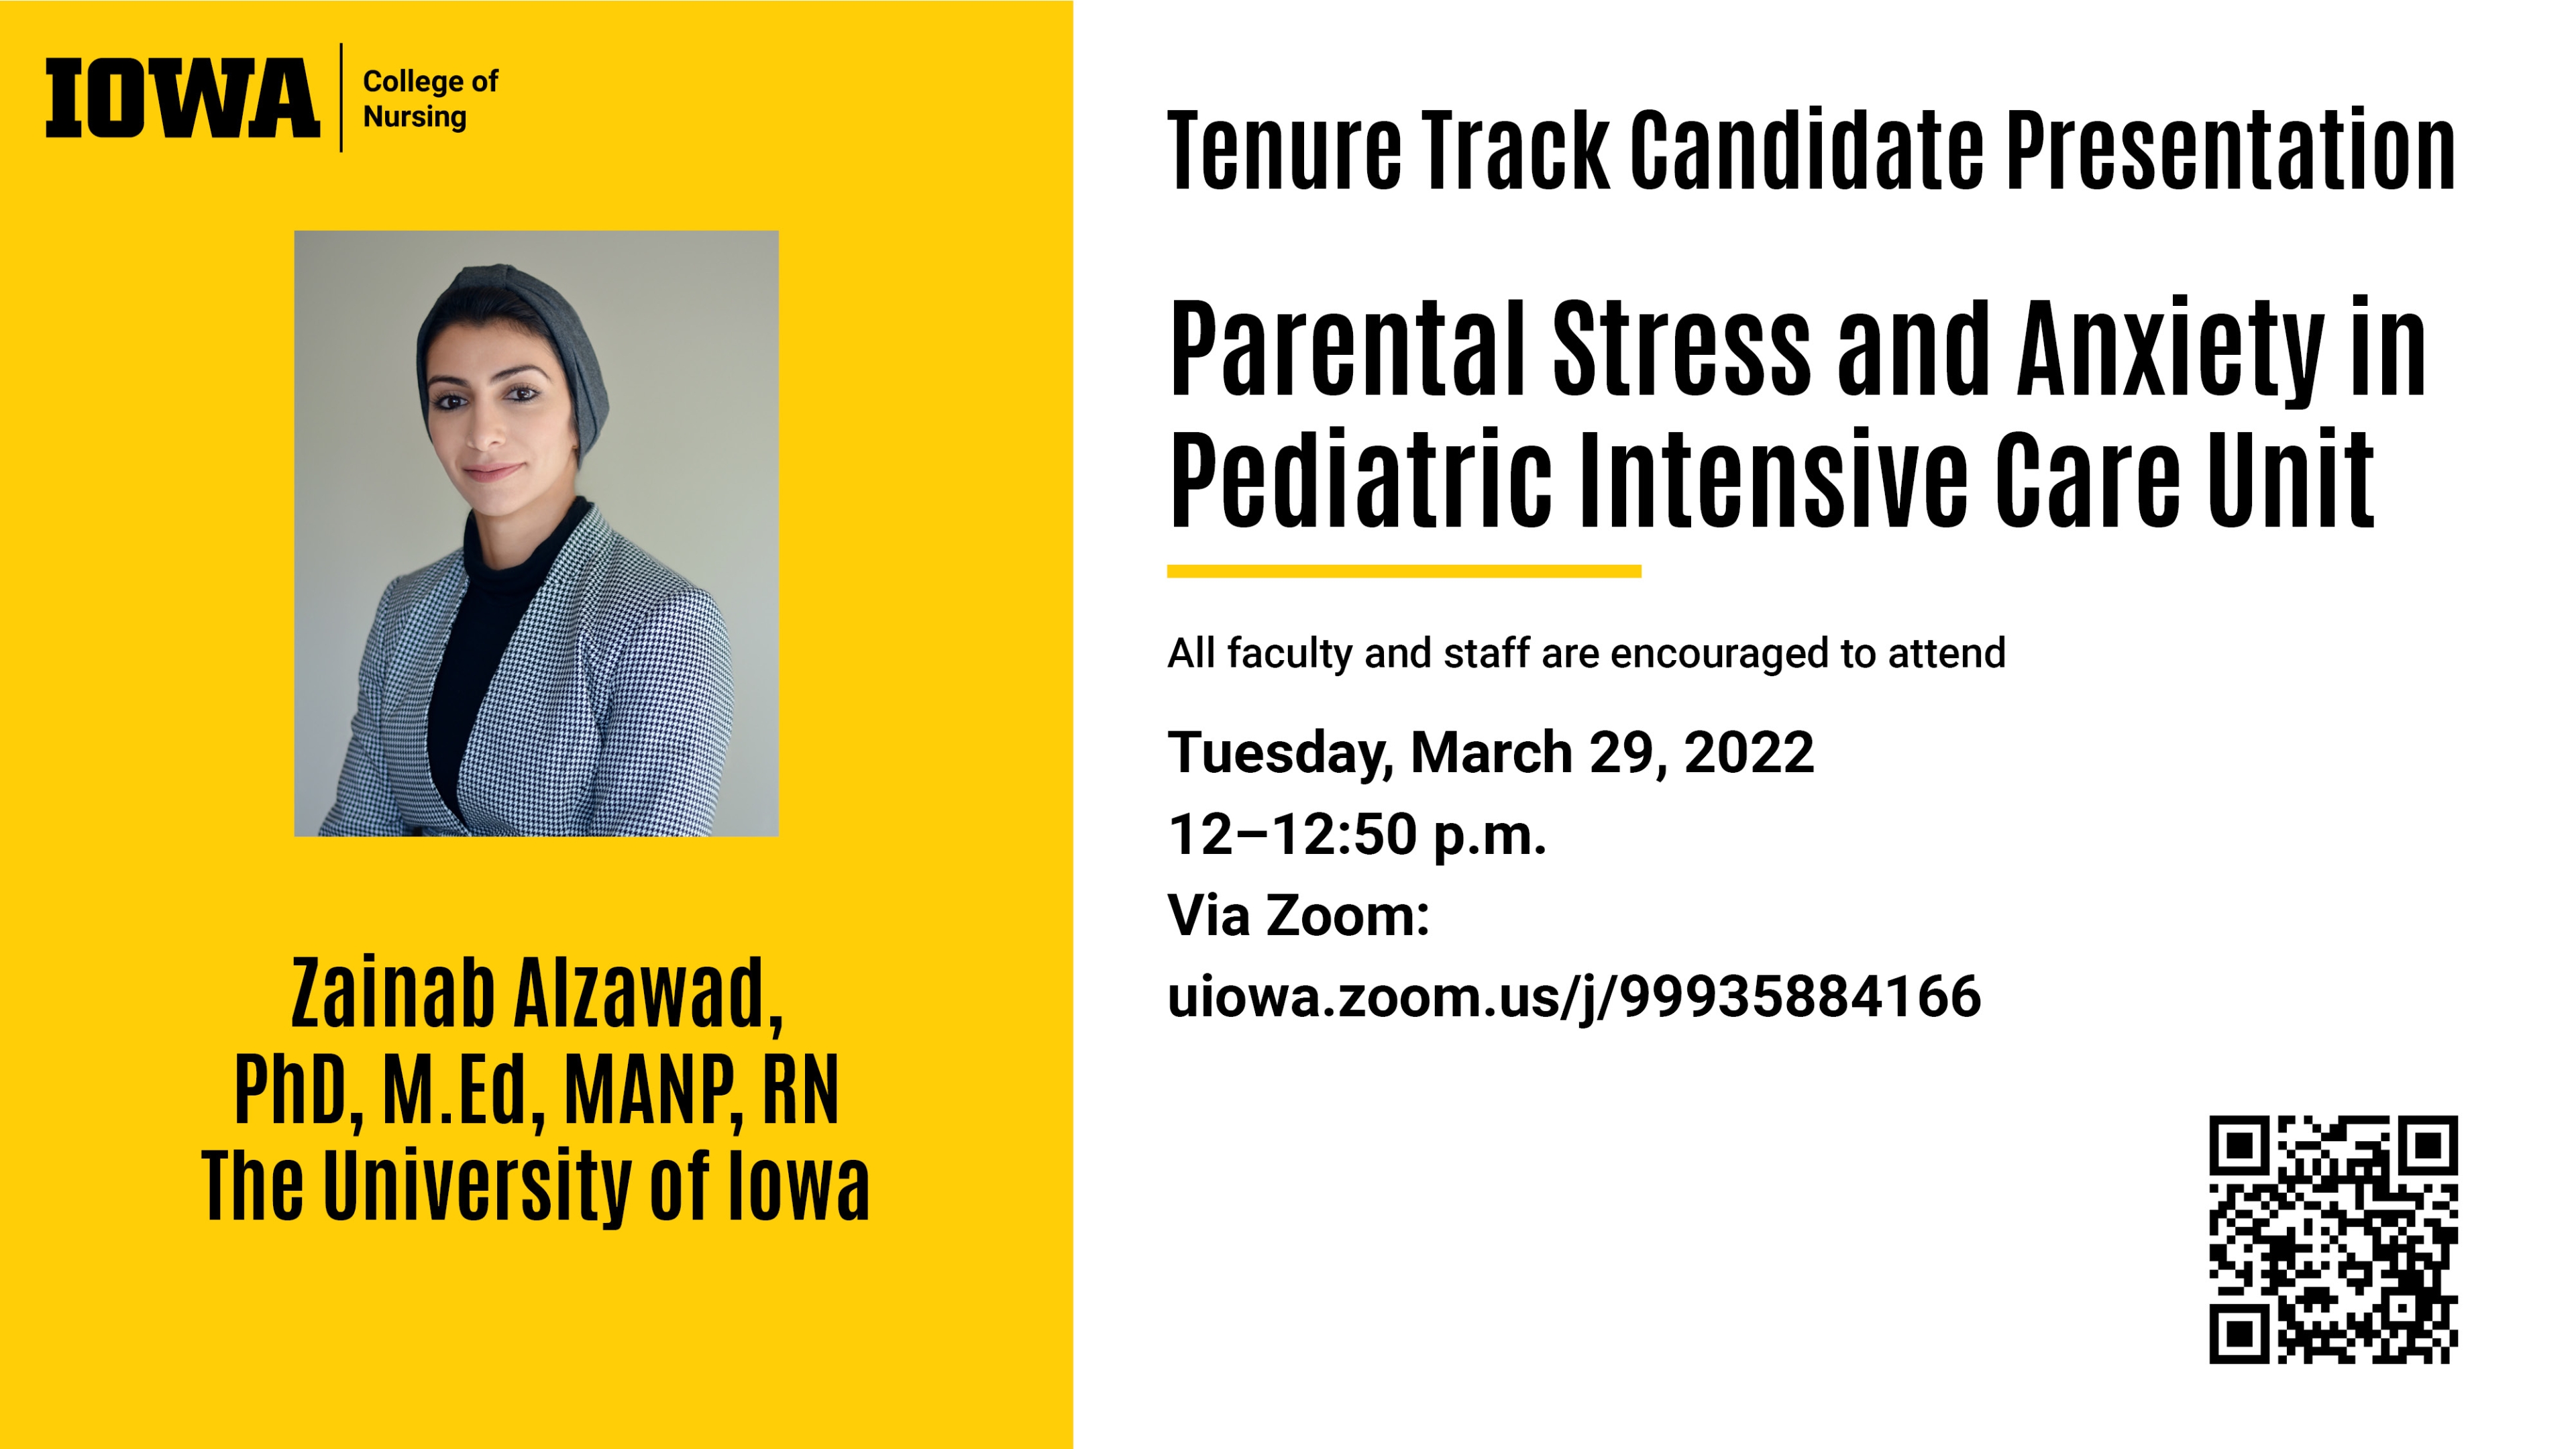 Tenure Track presentation by Z. Alzawad, March 29 12 p.m.